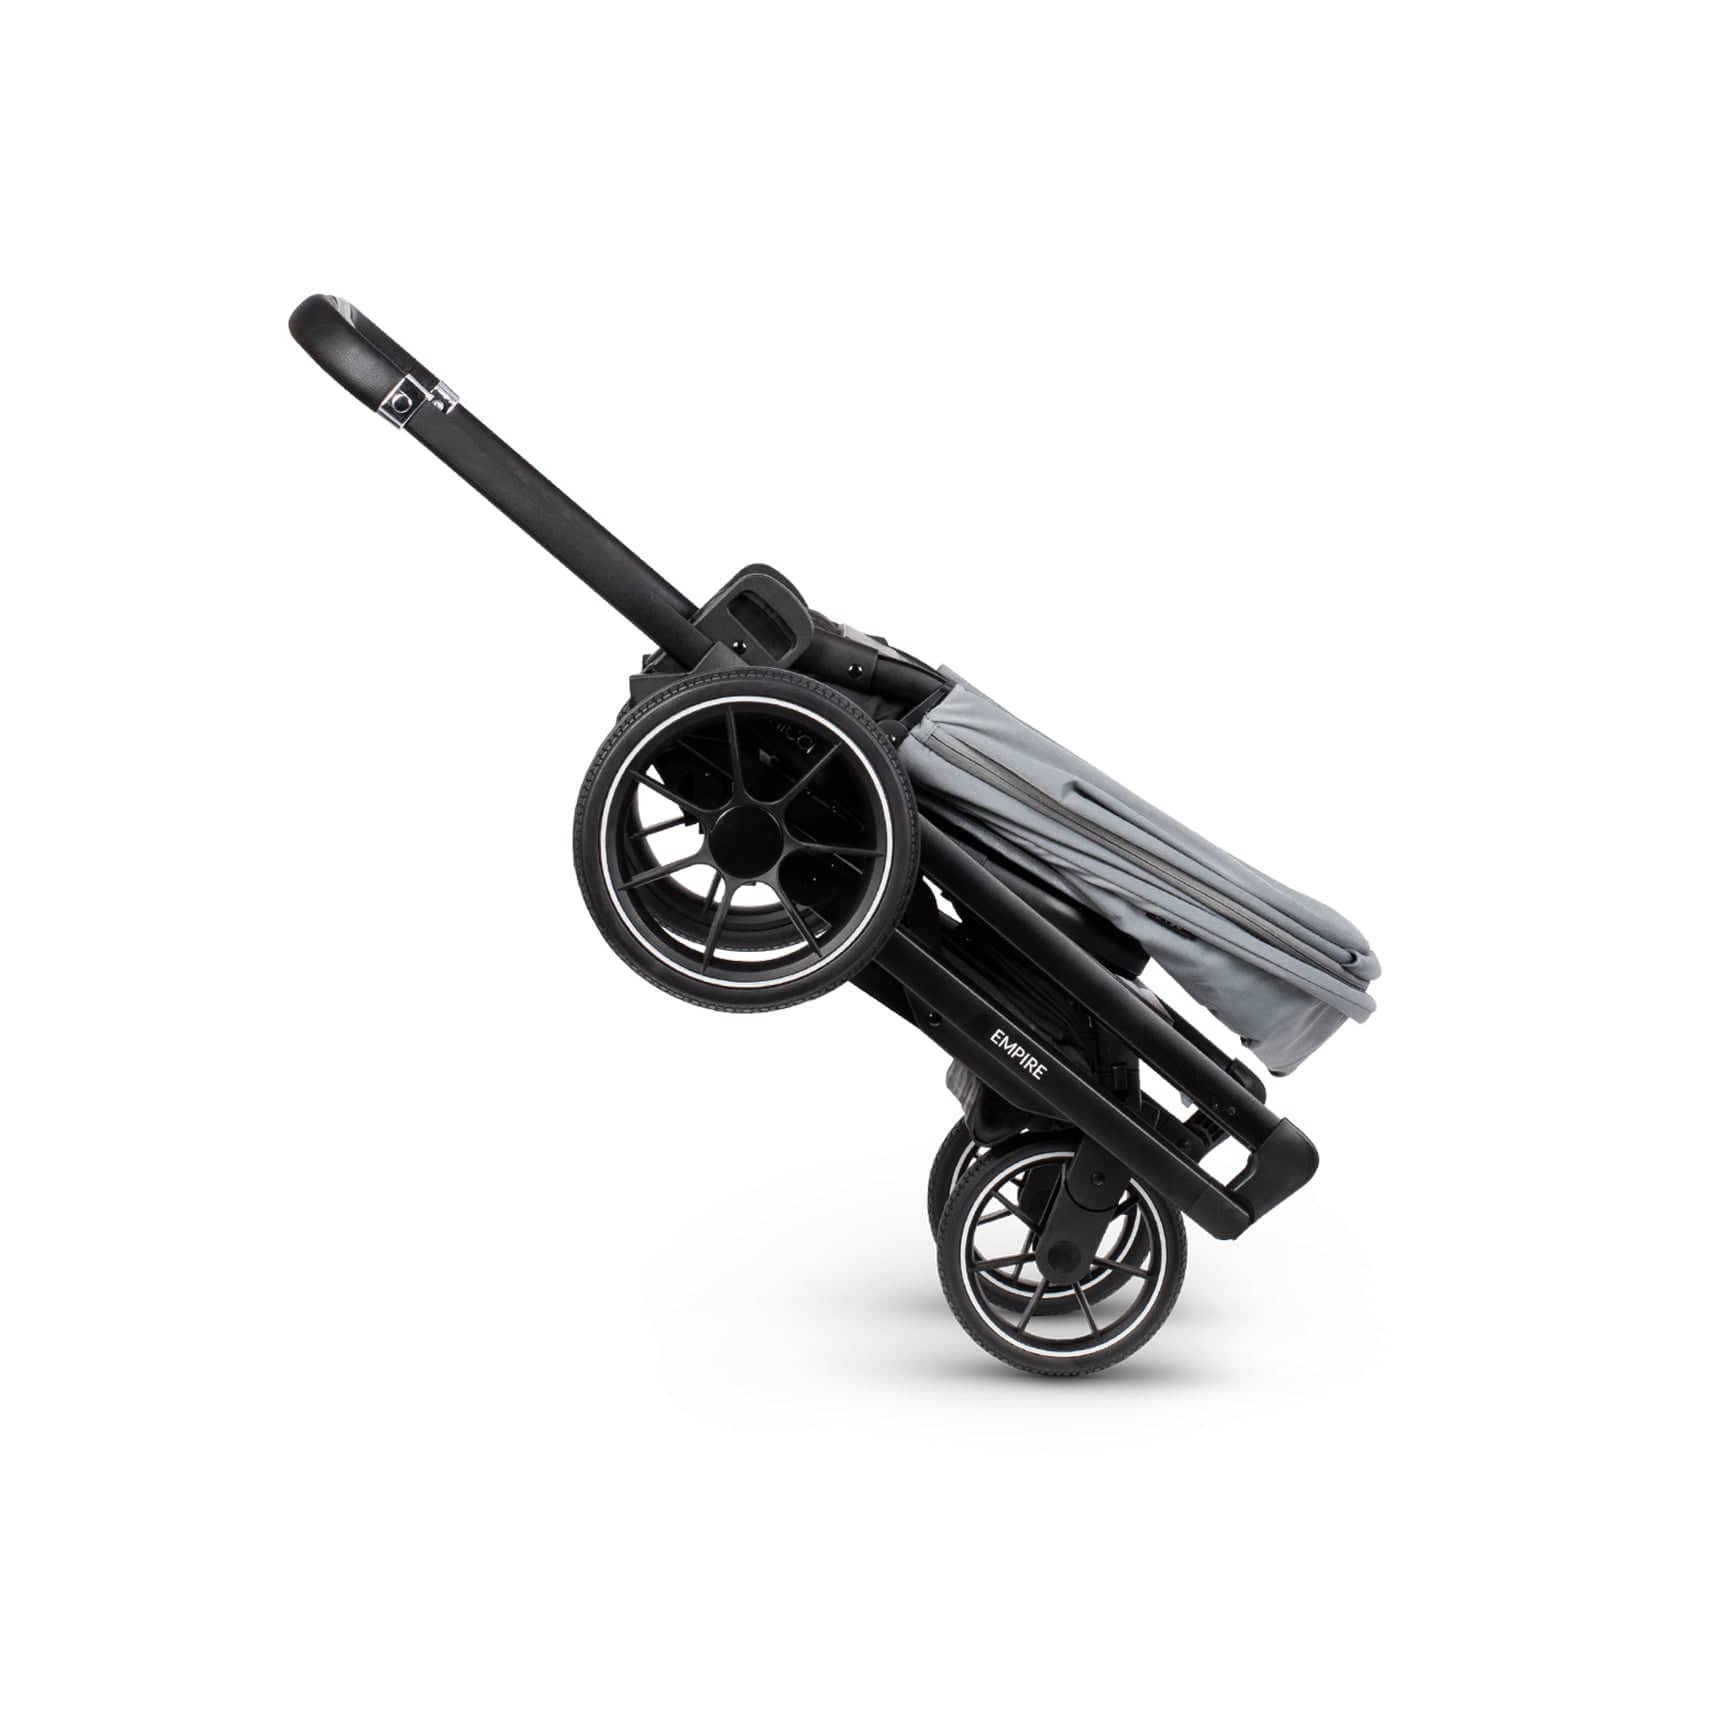 Venicci Empire Stroller & Accessory Pack in Urban Grey Pushchairs & Buggies 13176-URN-GRY 5905261331175